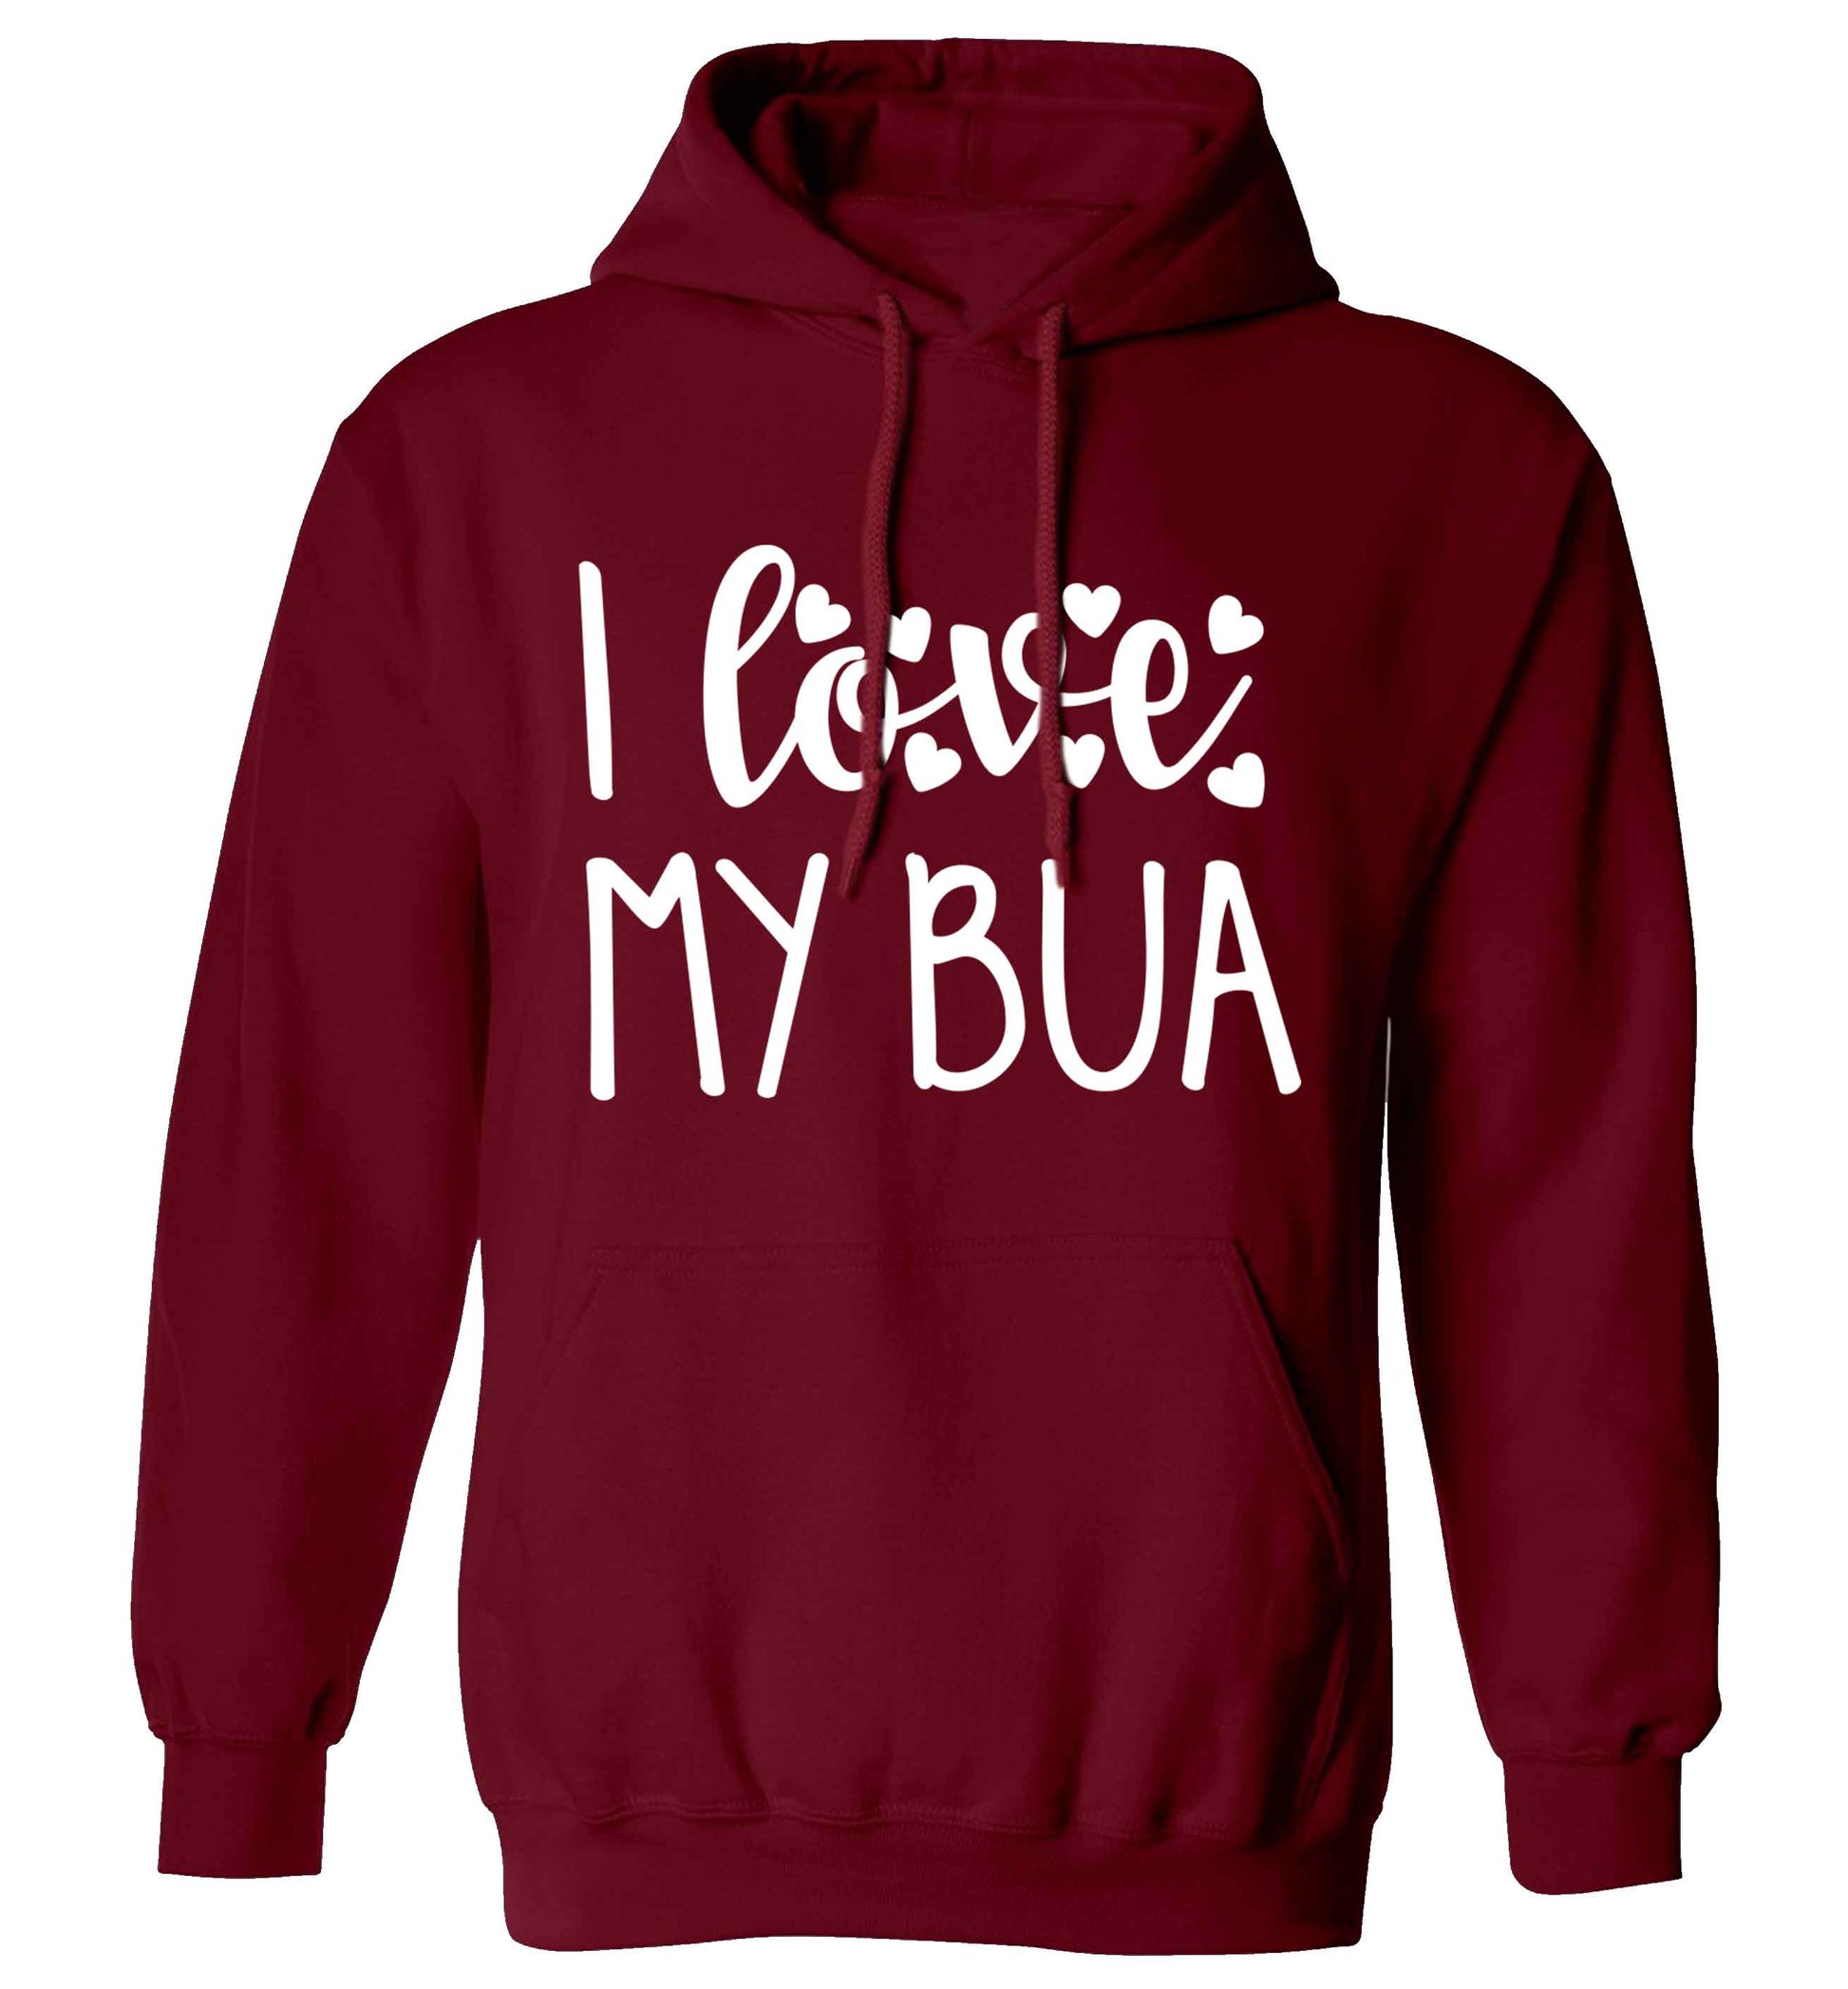 I love my bua adults unisex maroon hoodie 2XL